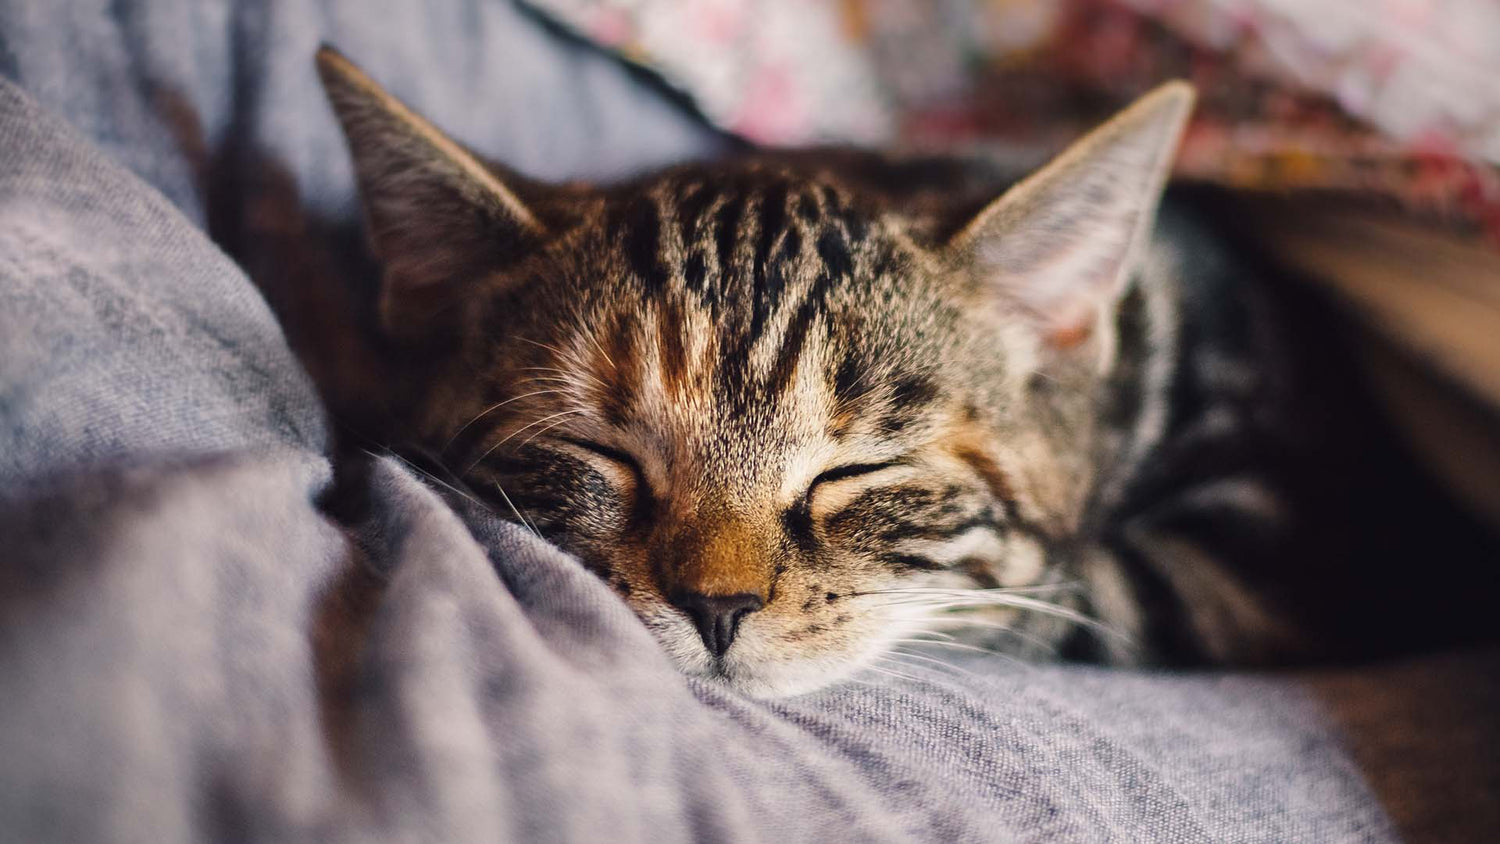 a cute tabby cat sleeping peacefully on a gray sheet